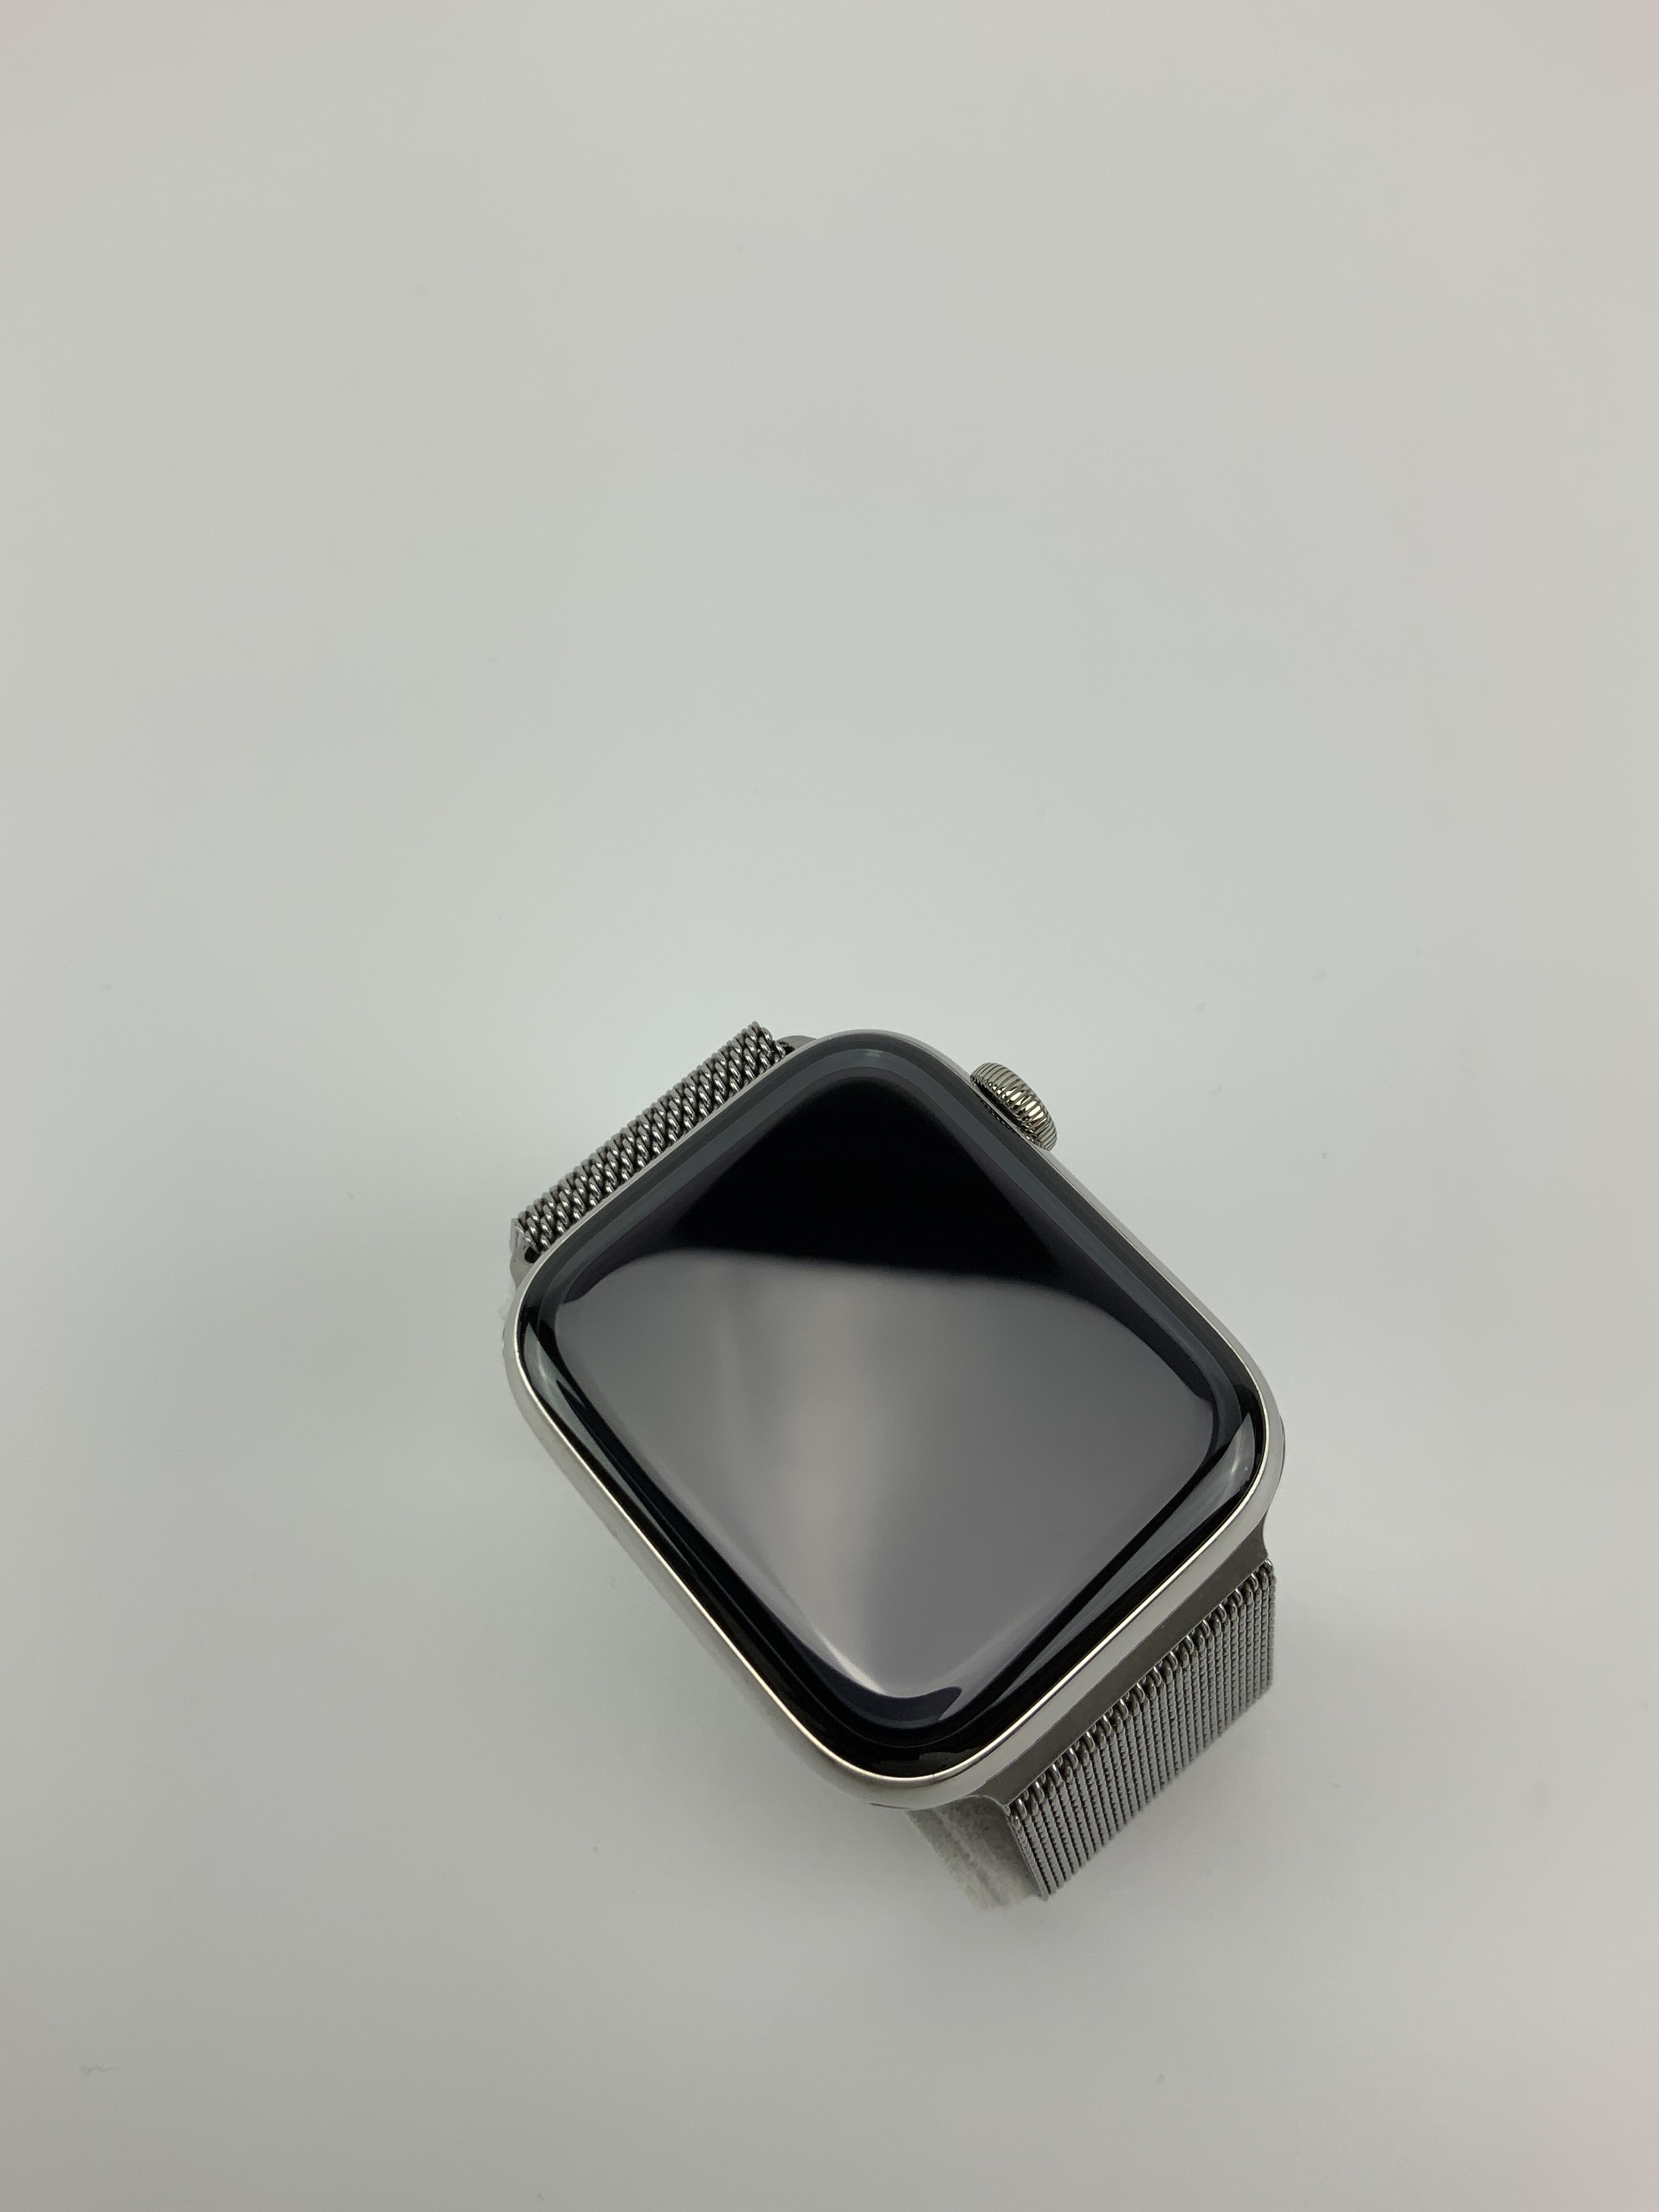 Watch Series 5 Steel Cellular (44mm), Silver, Kuva 3